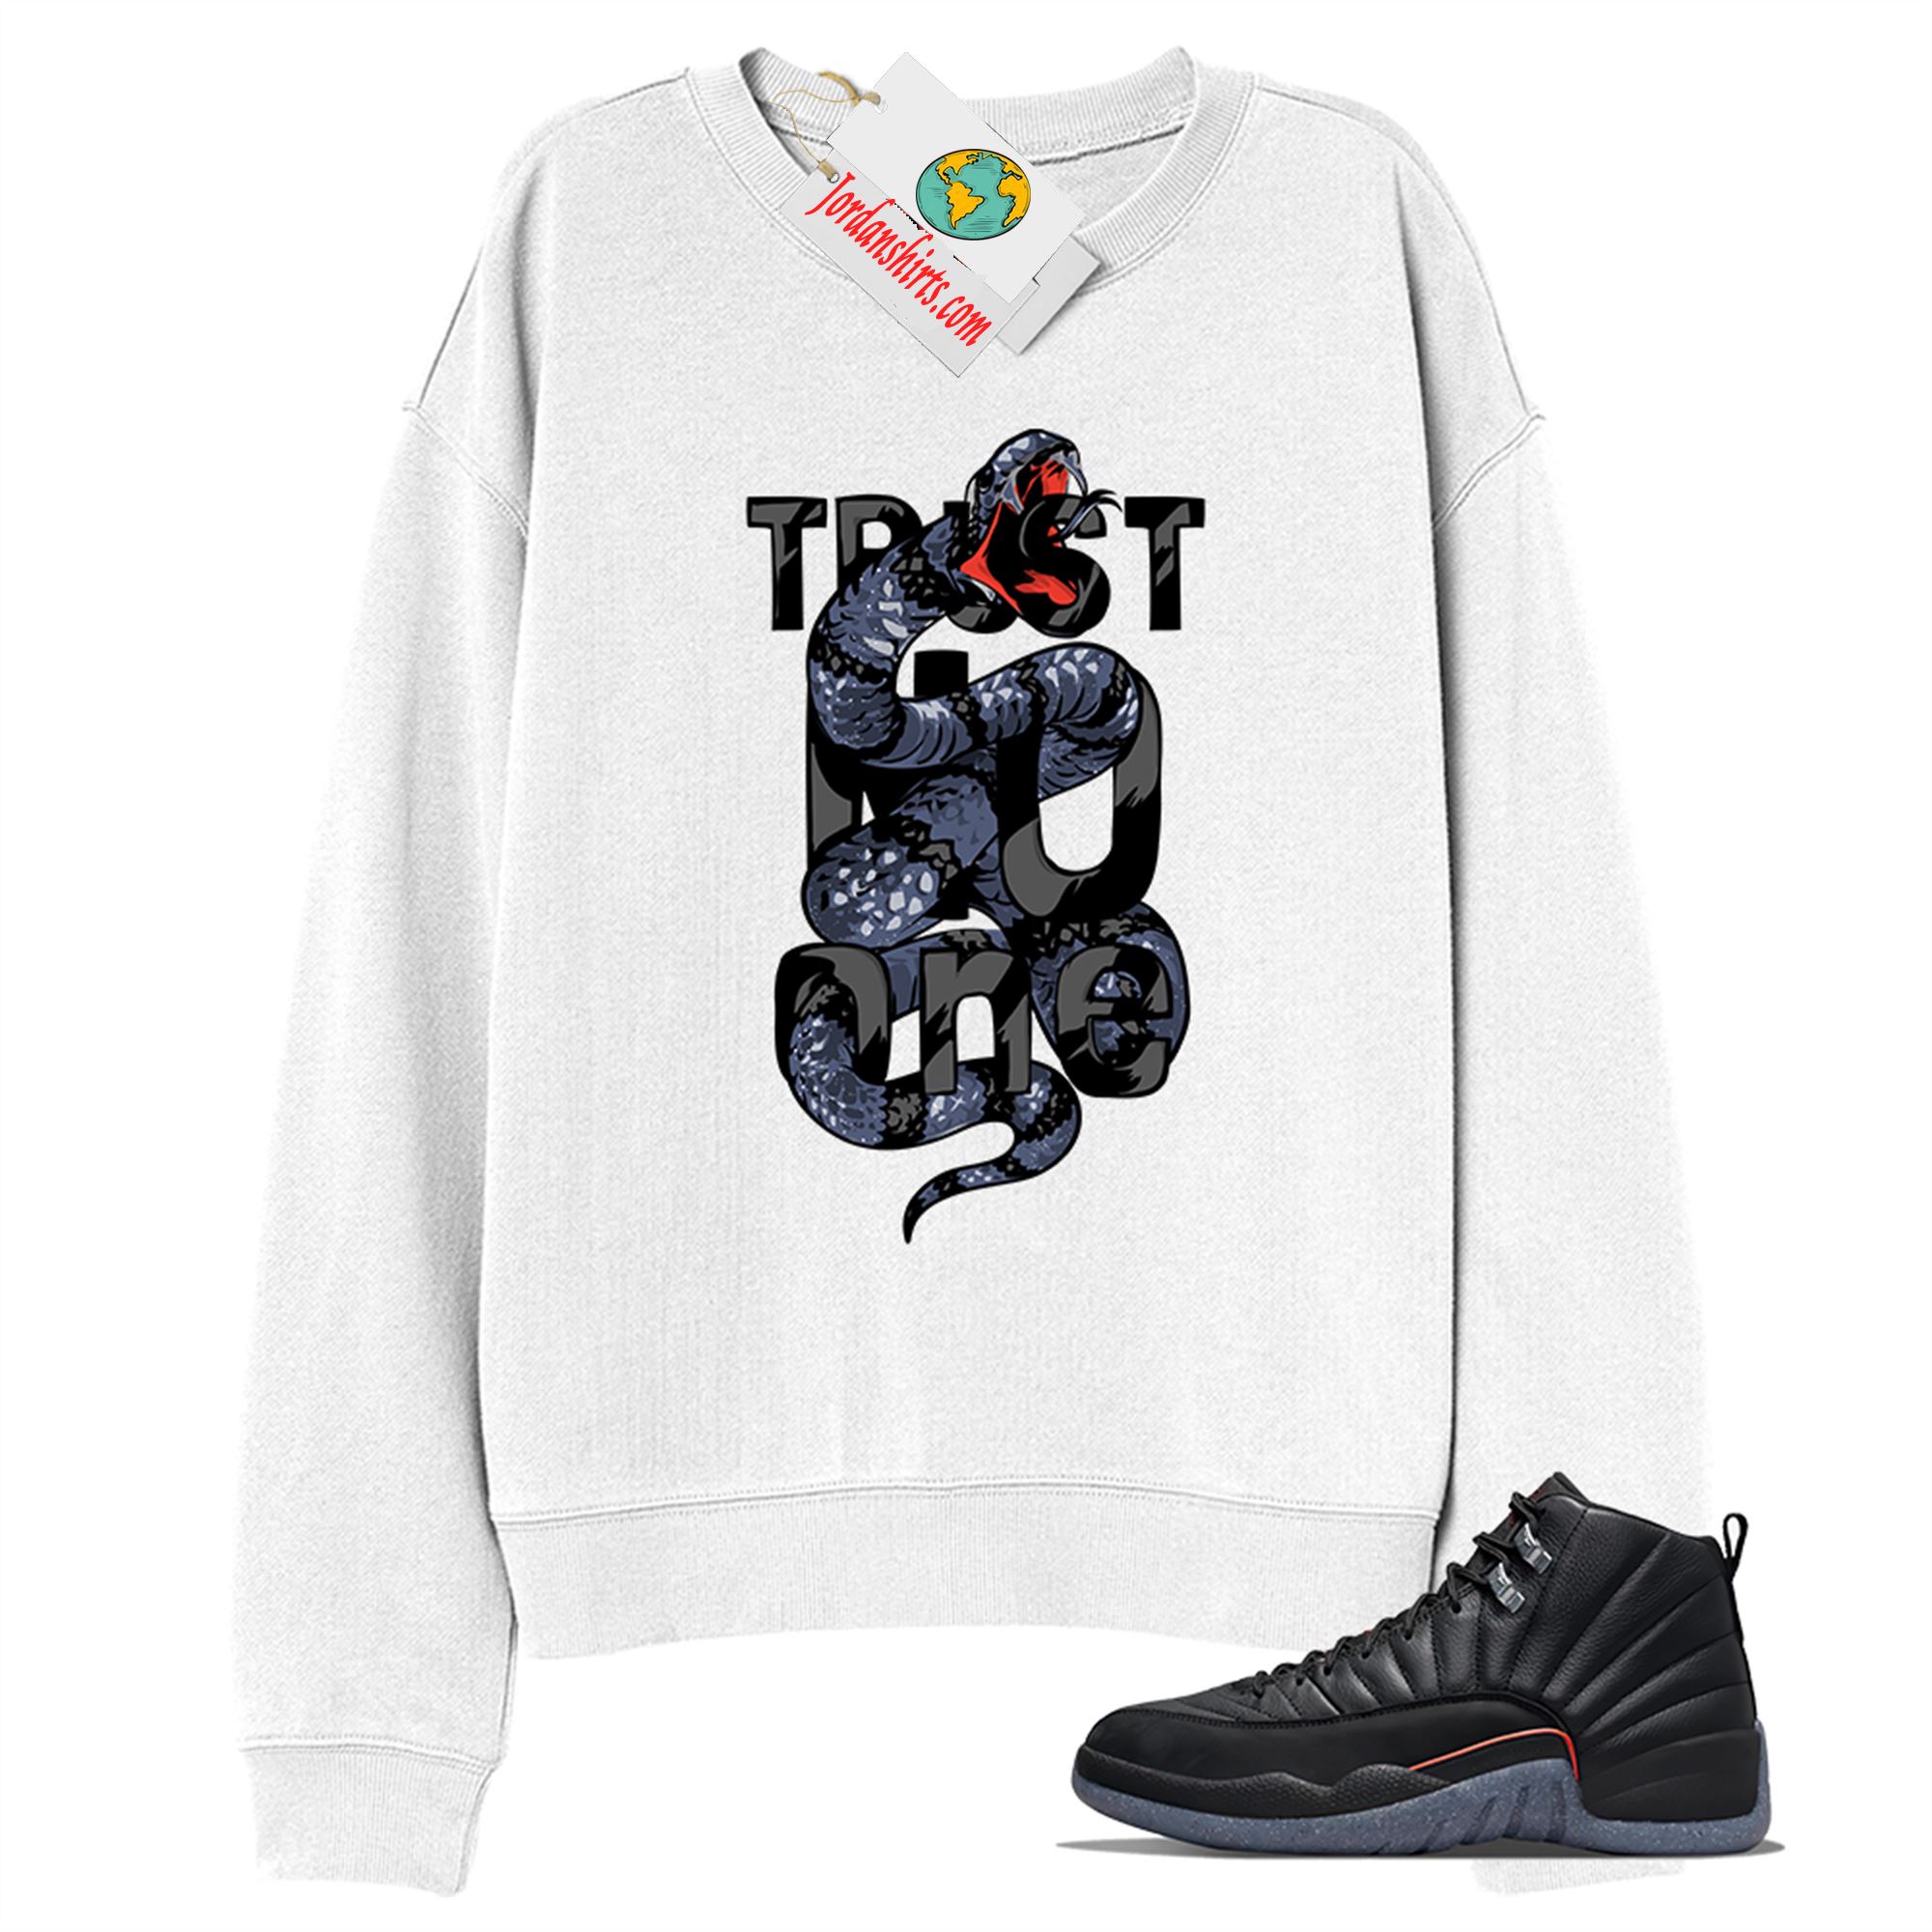 Jordan 12 Sweatshirt, Trust No One King Snake White Sweatshirt Air Jordan 12 Utility Grind 12s Plus Size Up To 5xl